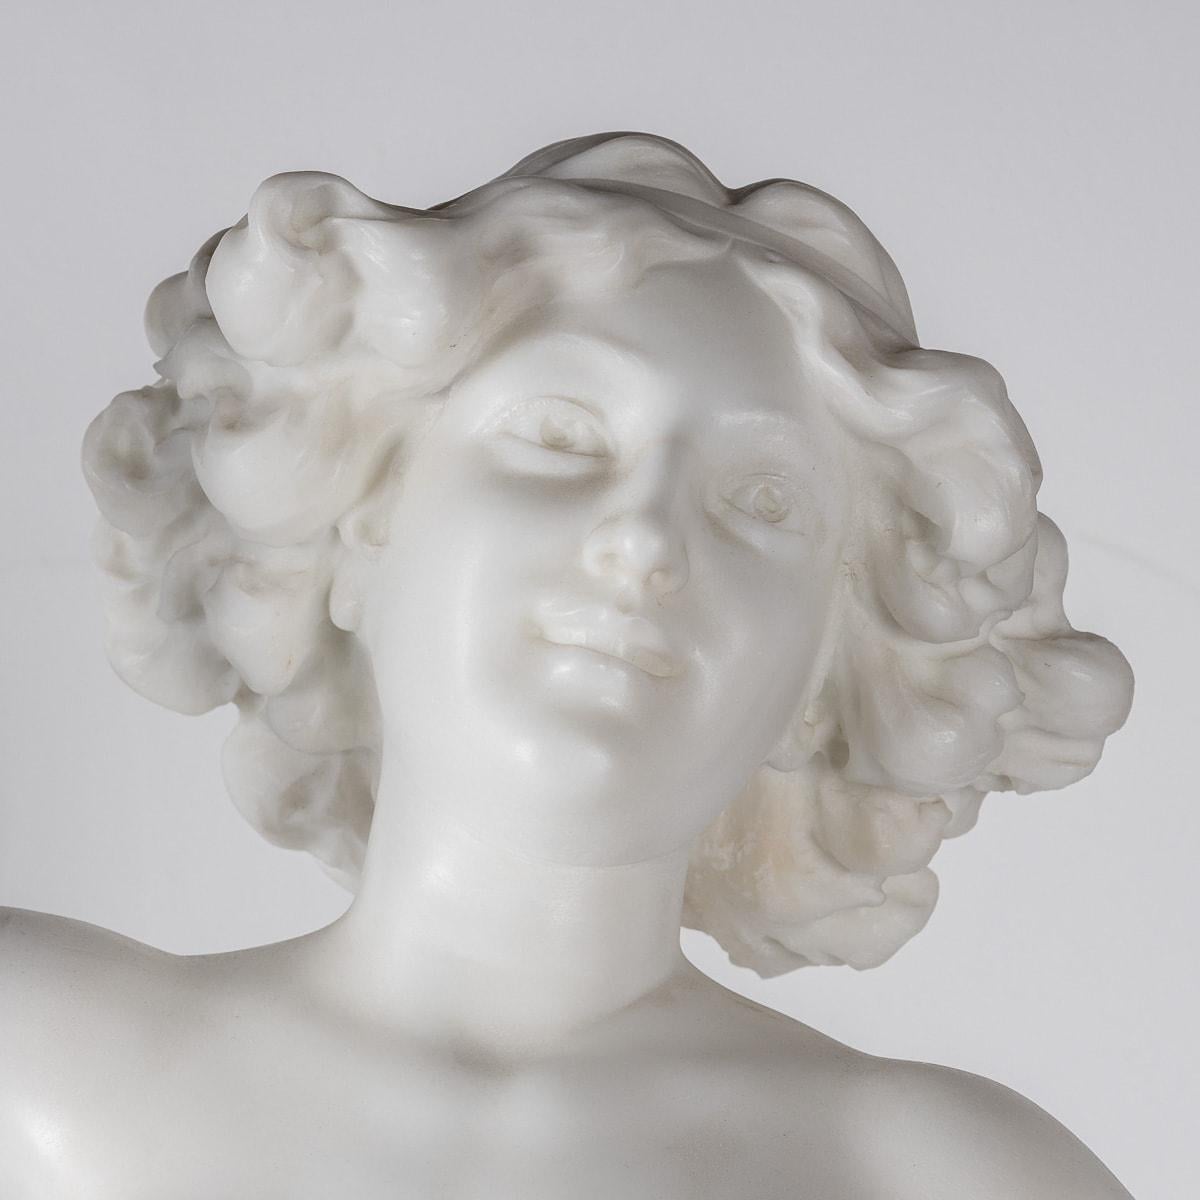 19th Century Italian Marble Figure Of A Nude, Adolfo Cipriani (1880-1930) For Sale 10